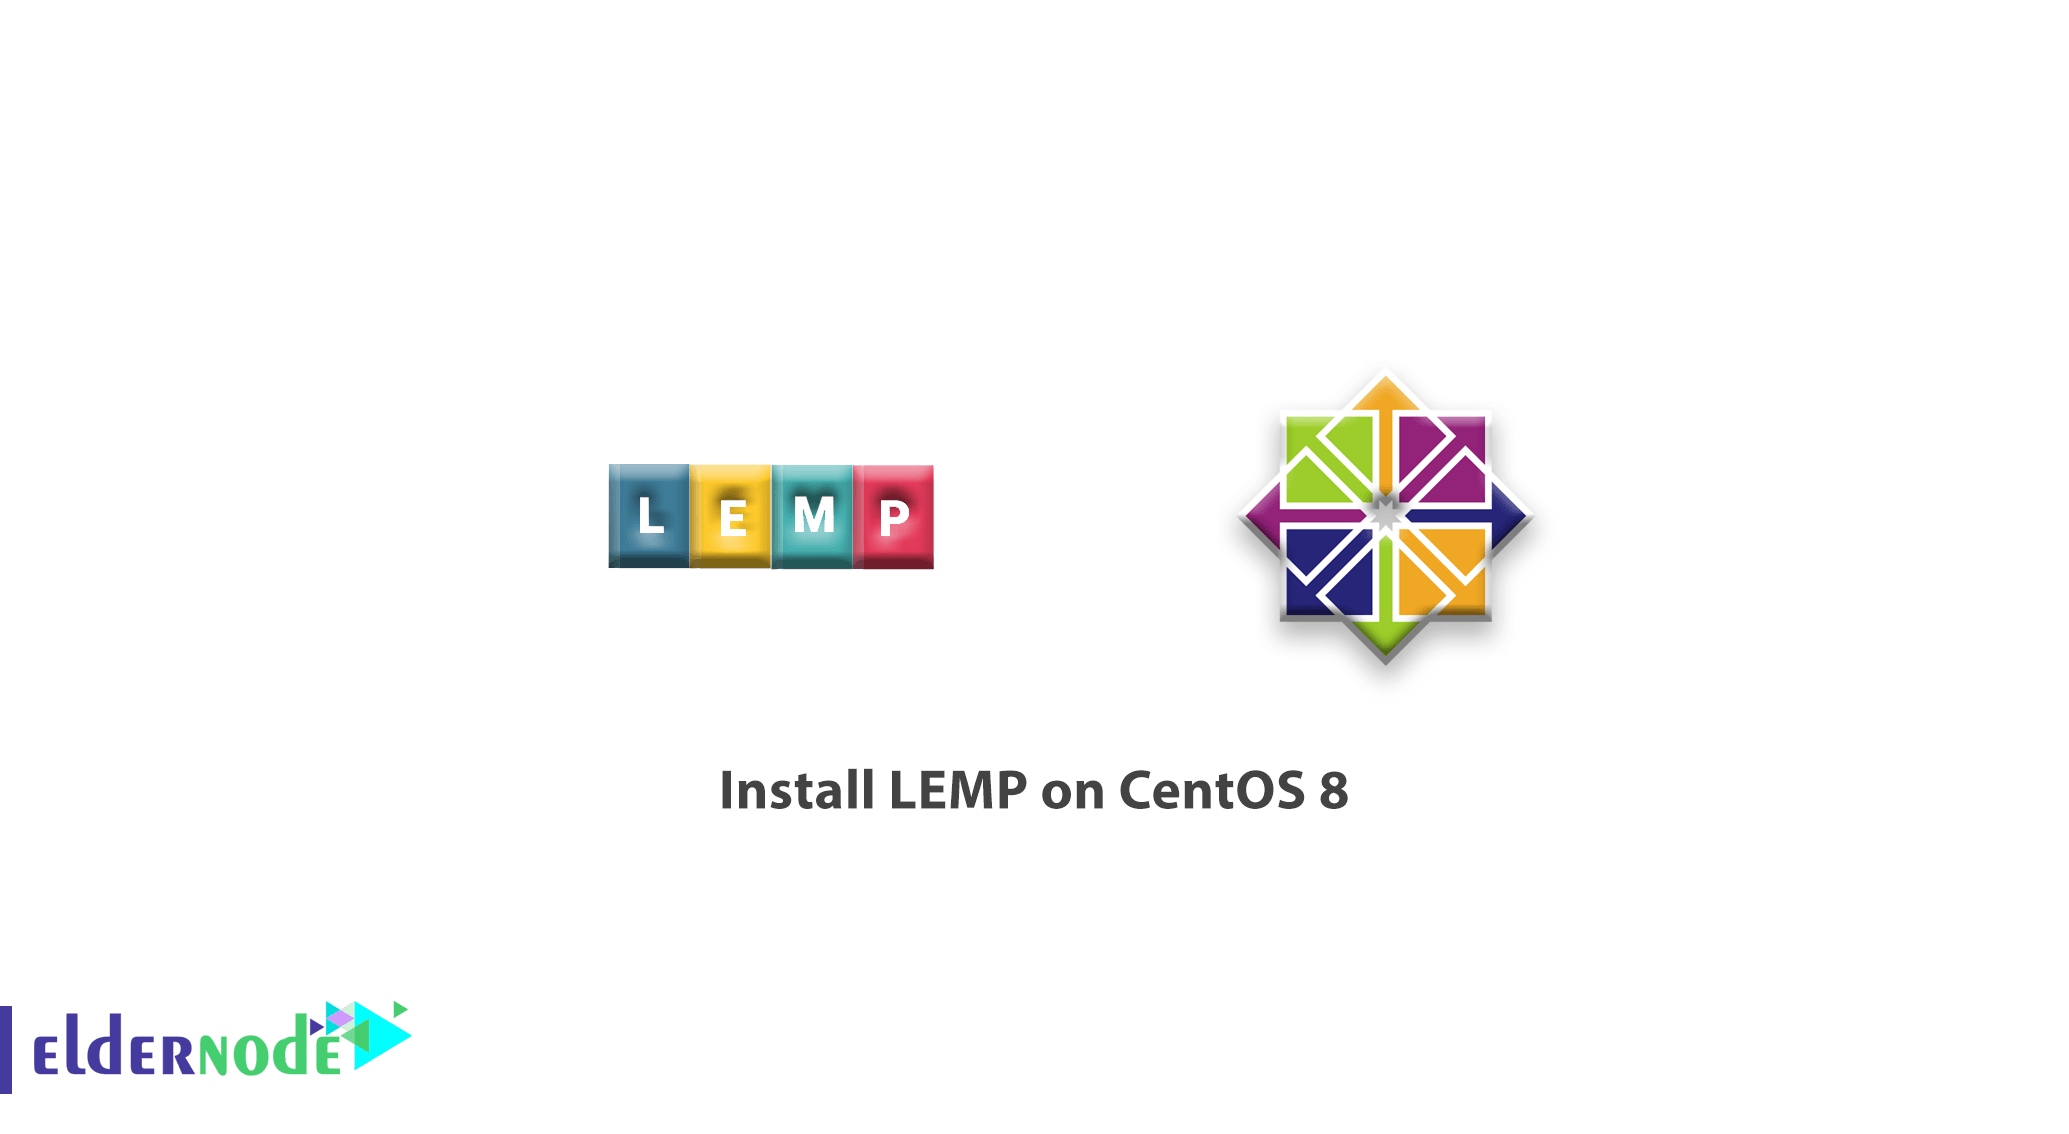 How to install LEMP on CentOS 8